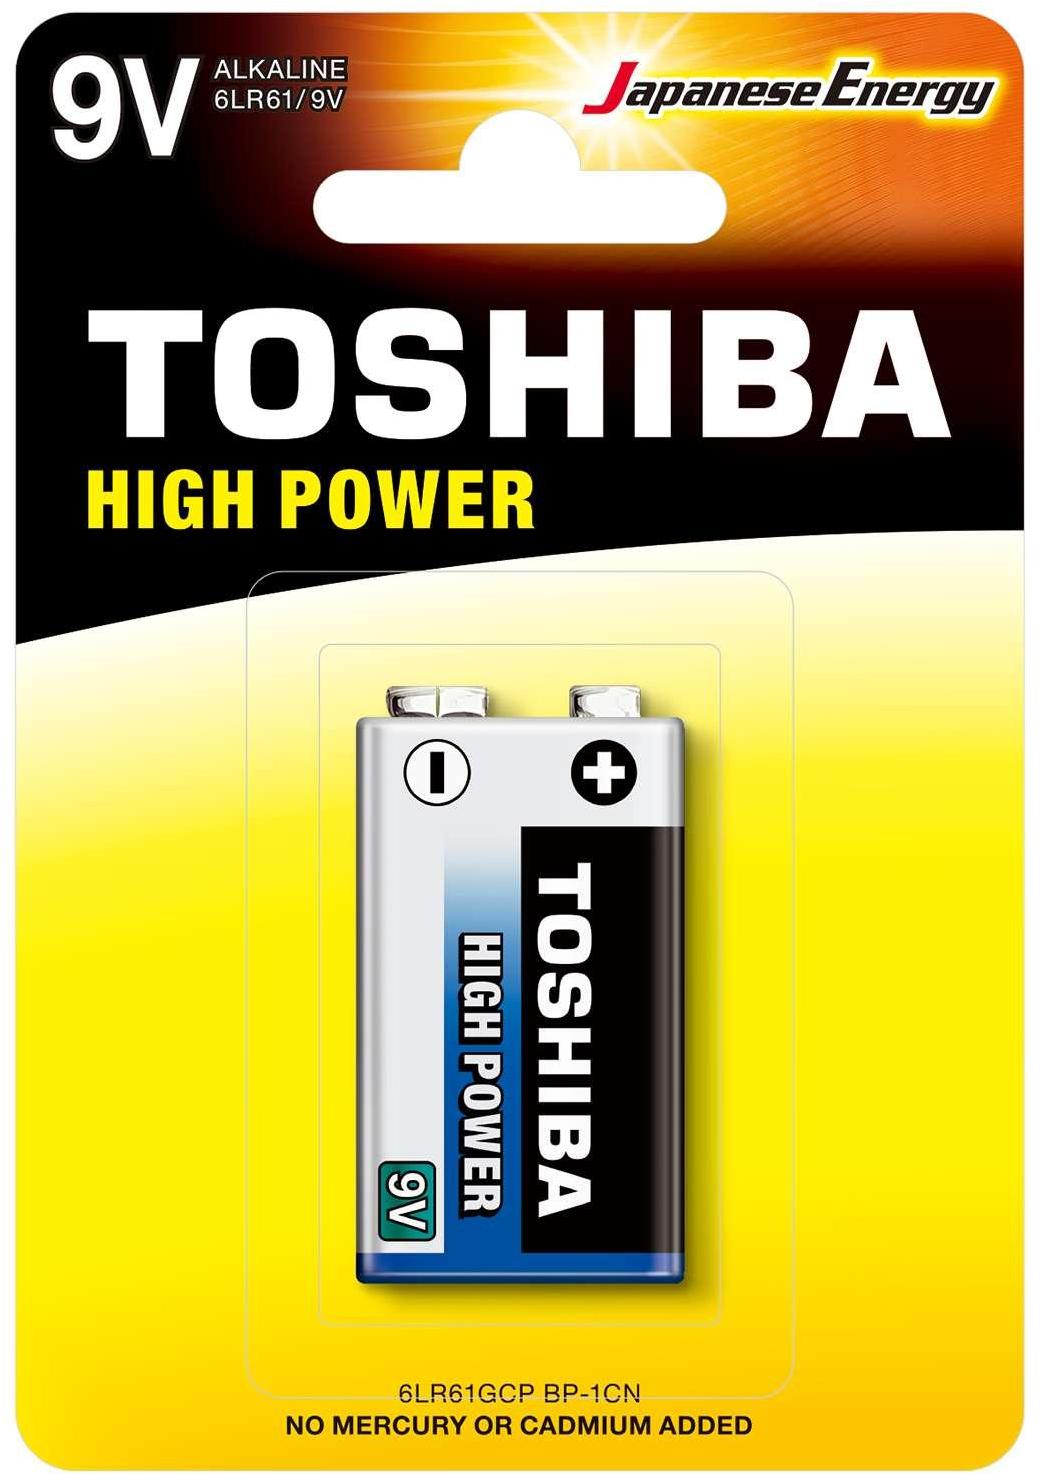 Batterie Toshiba 6LR61 - 9v